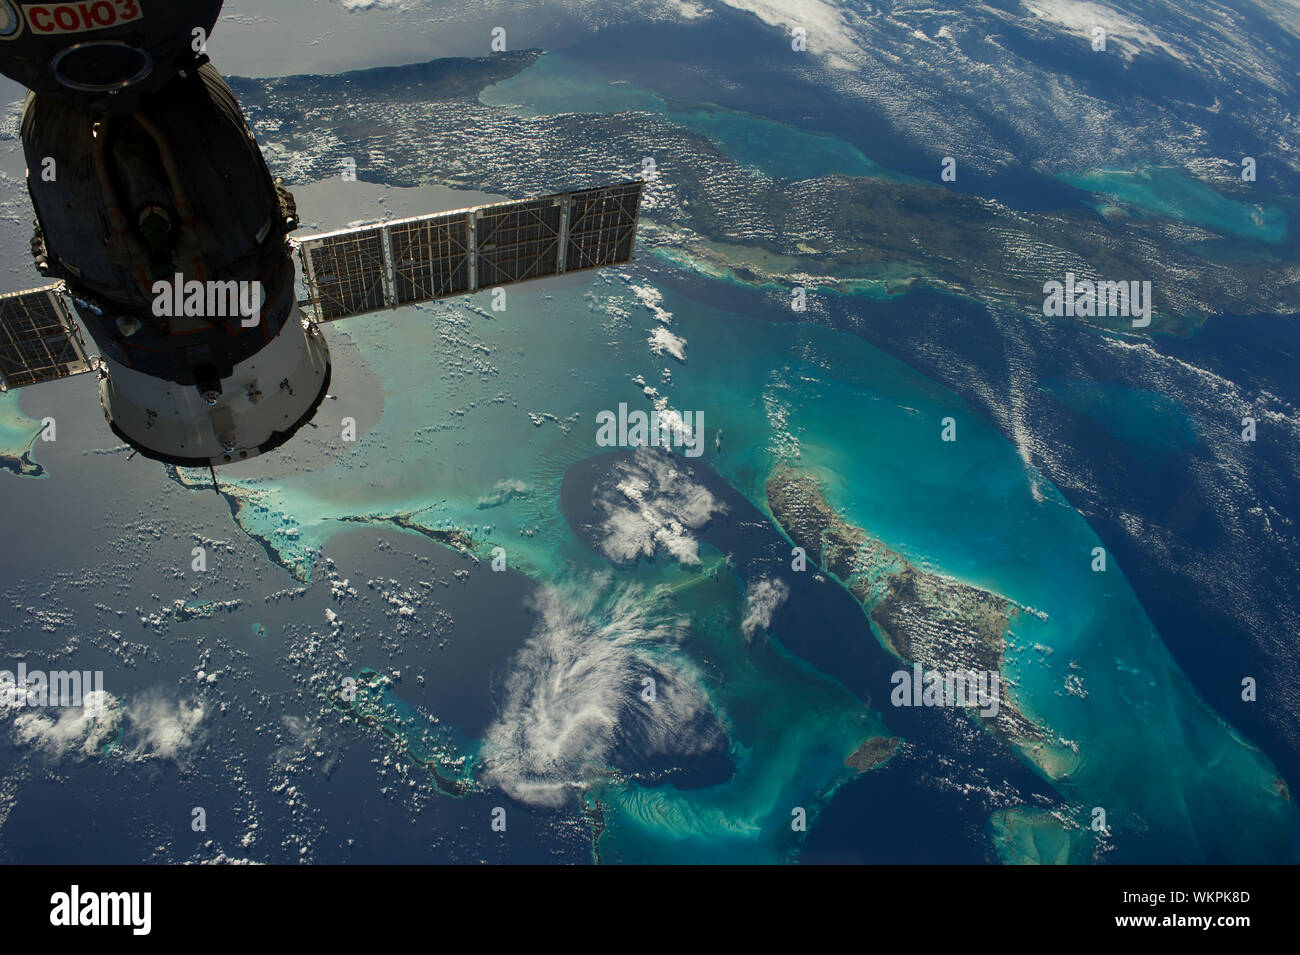 Caribbean sea, Andros island, Cuba (top of image), Russian Soyuz spacecraft, December 23, 2013, by NASA/DPA Stock Photo